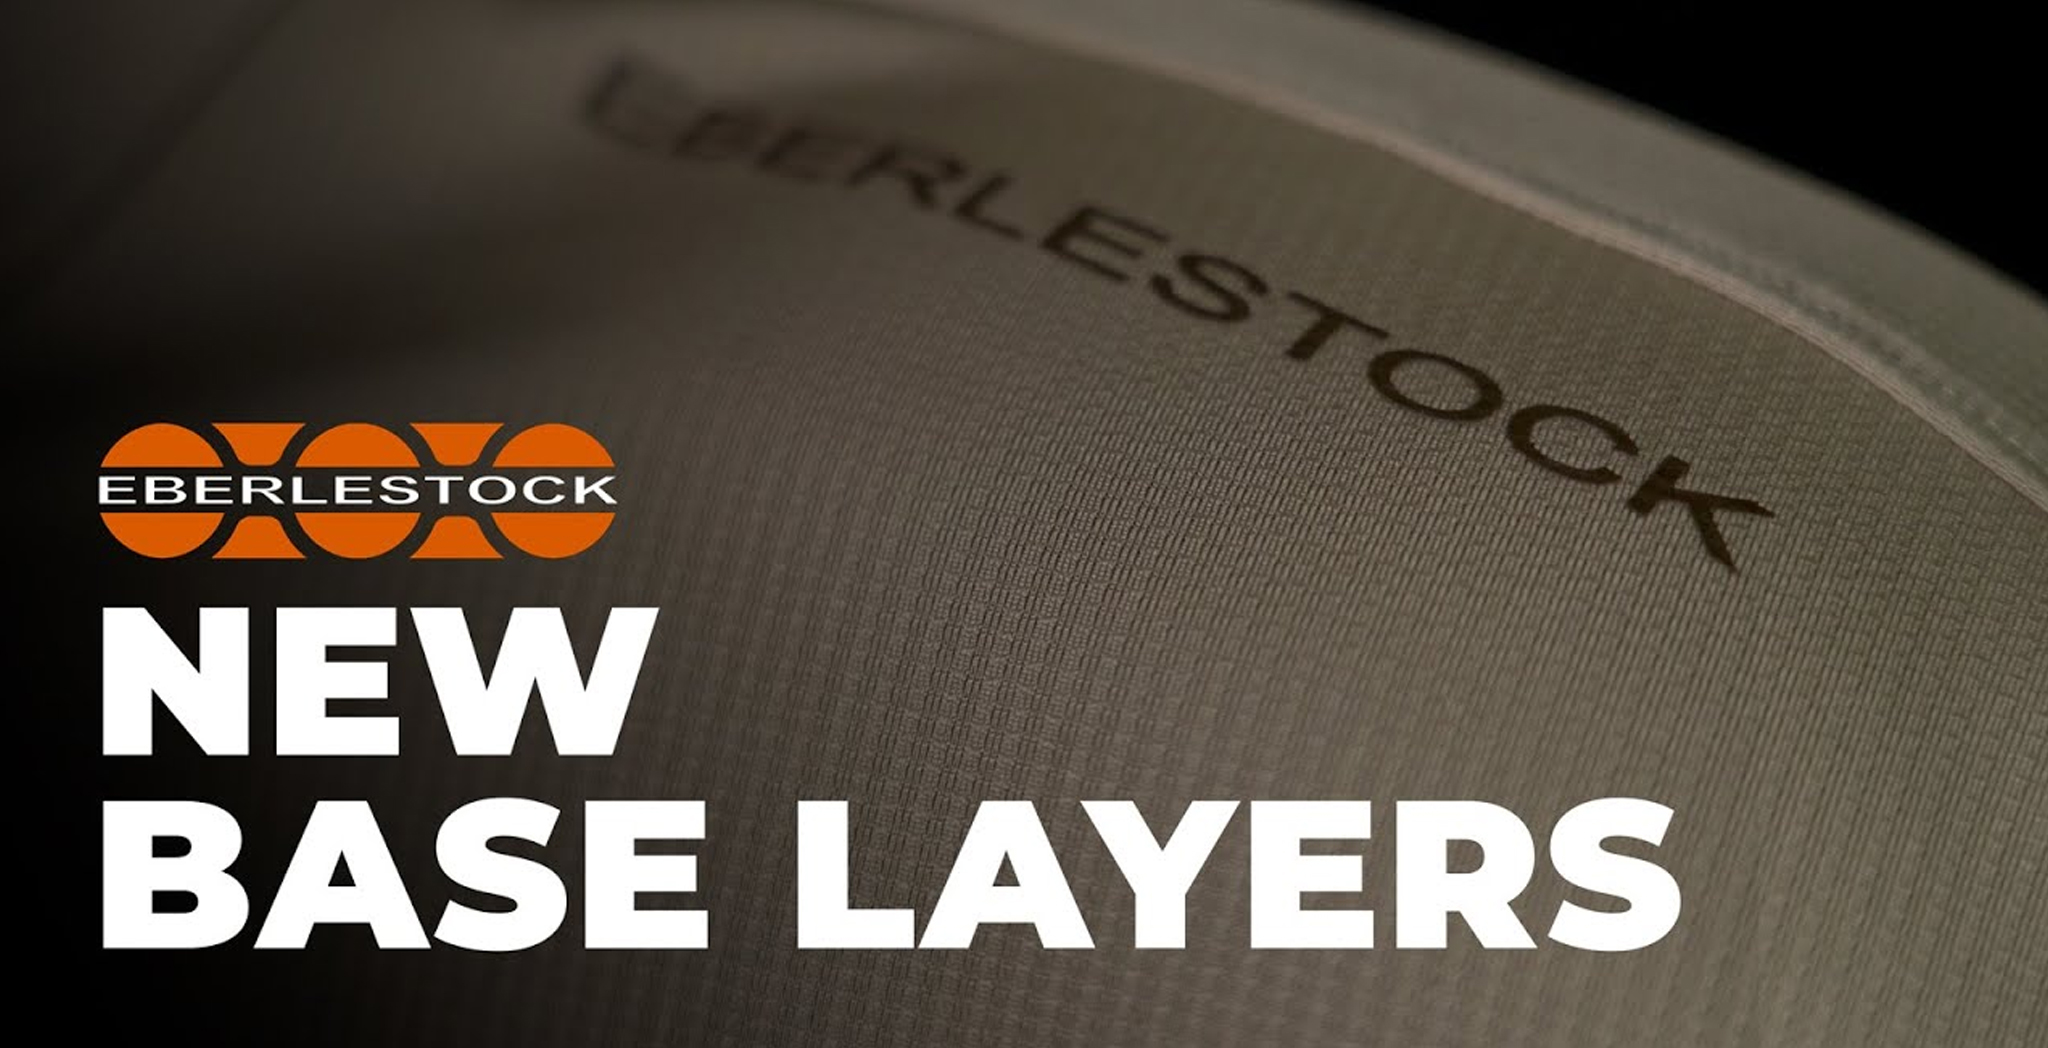 Eberlestock: New Base Layers